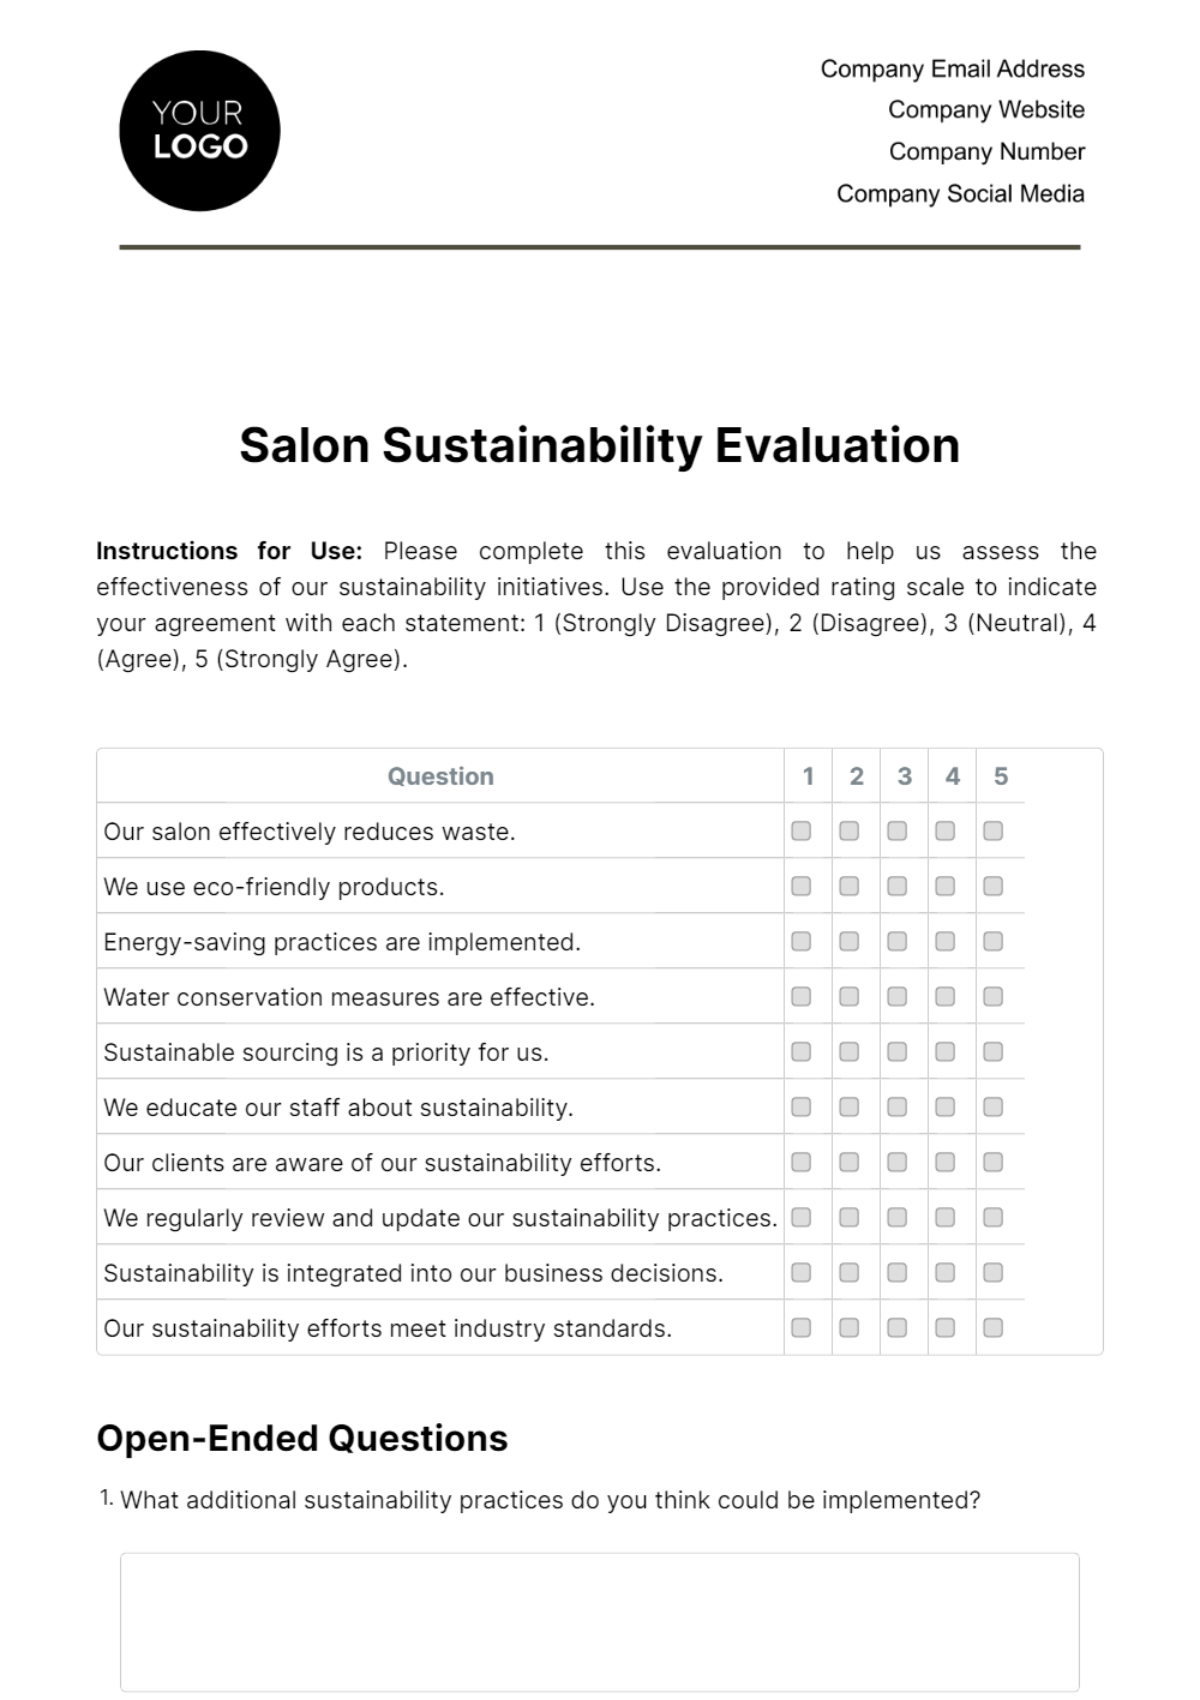 Free Salon Sustainability Evaluation Template